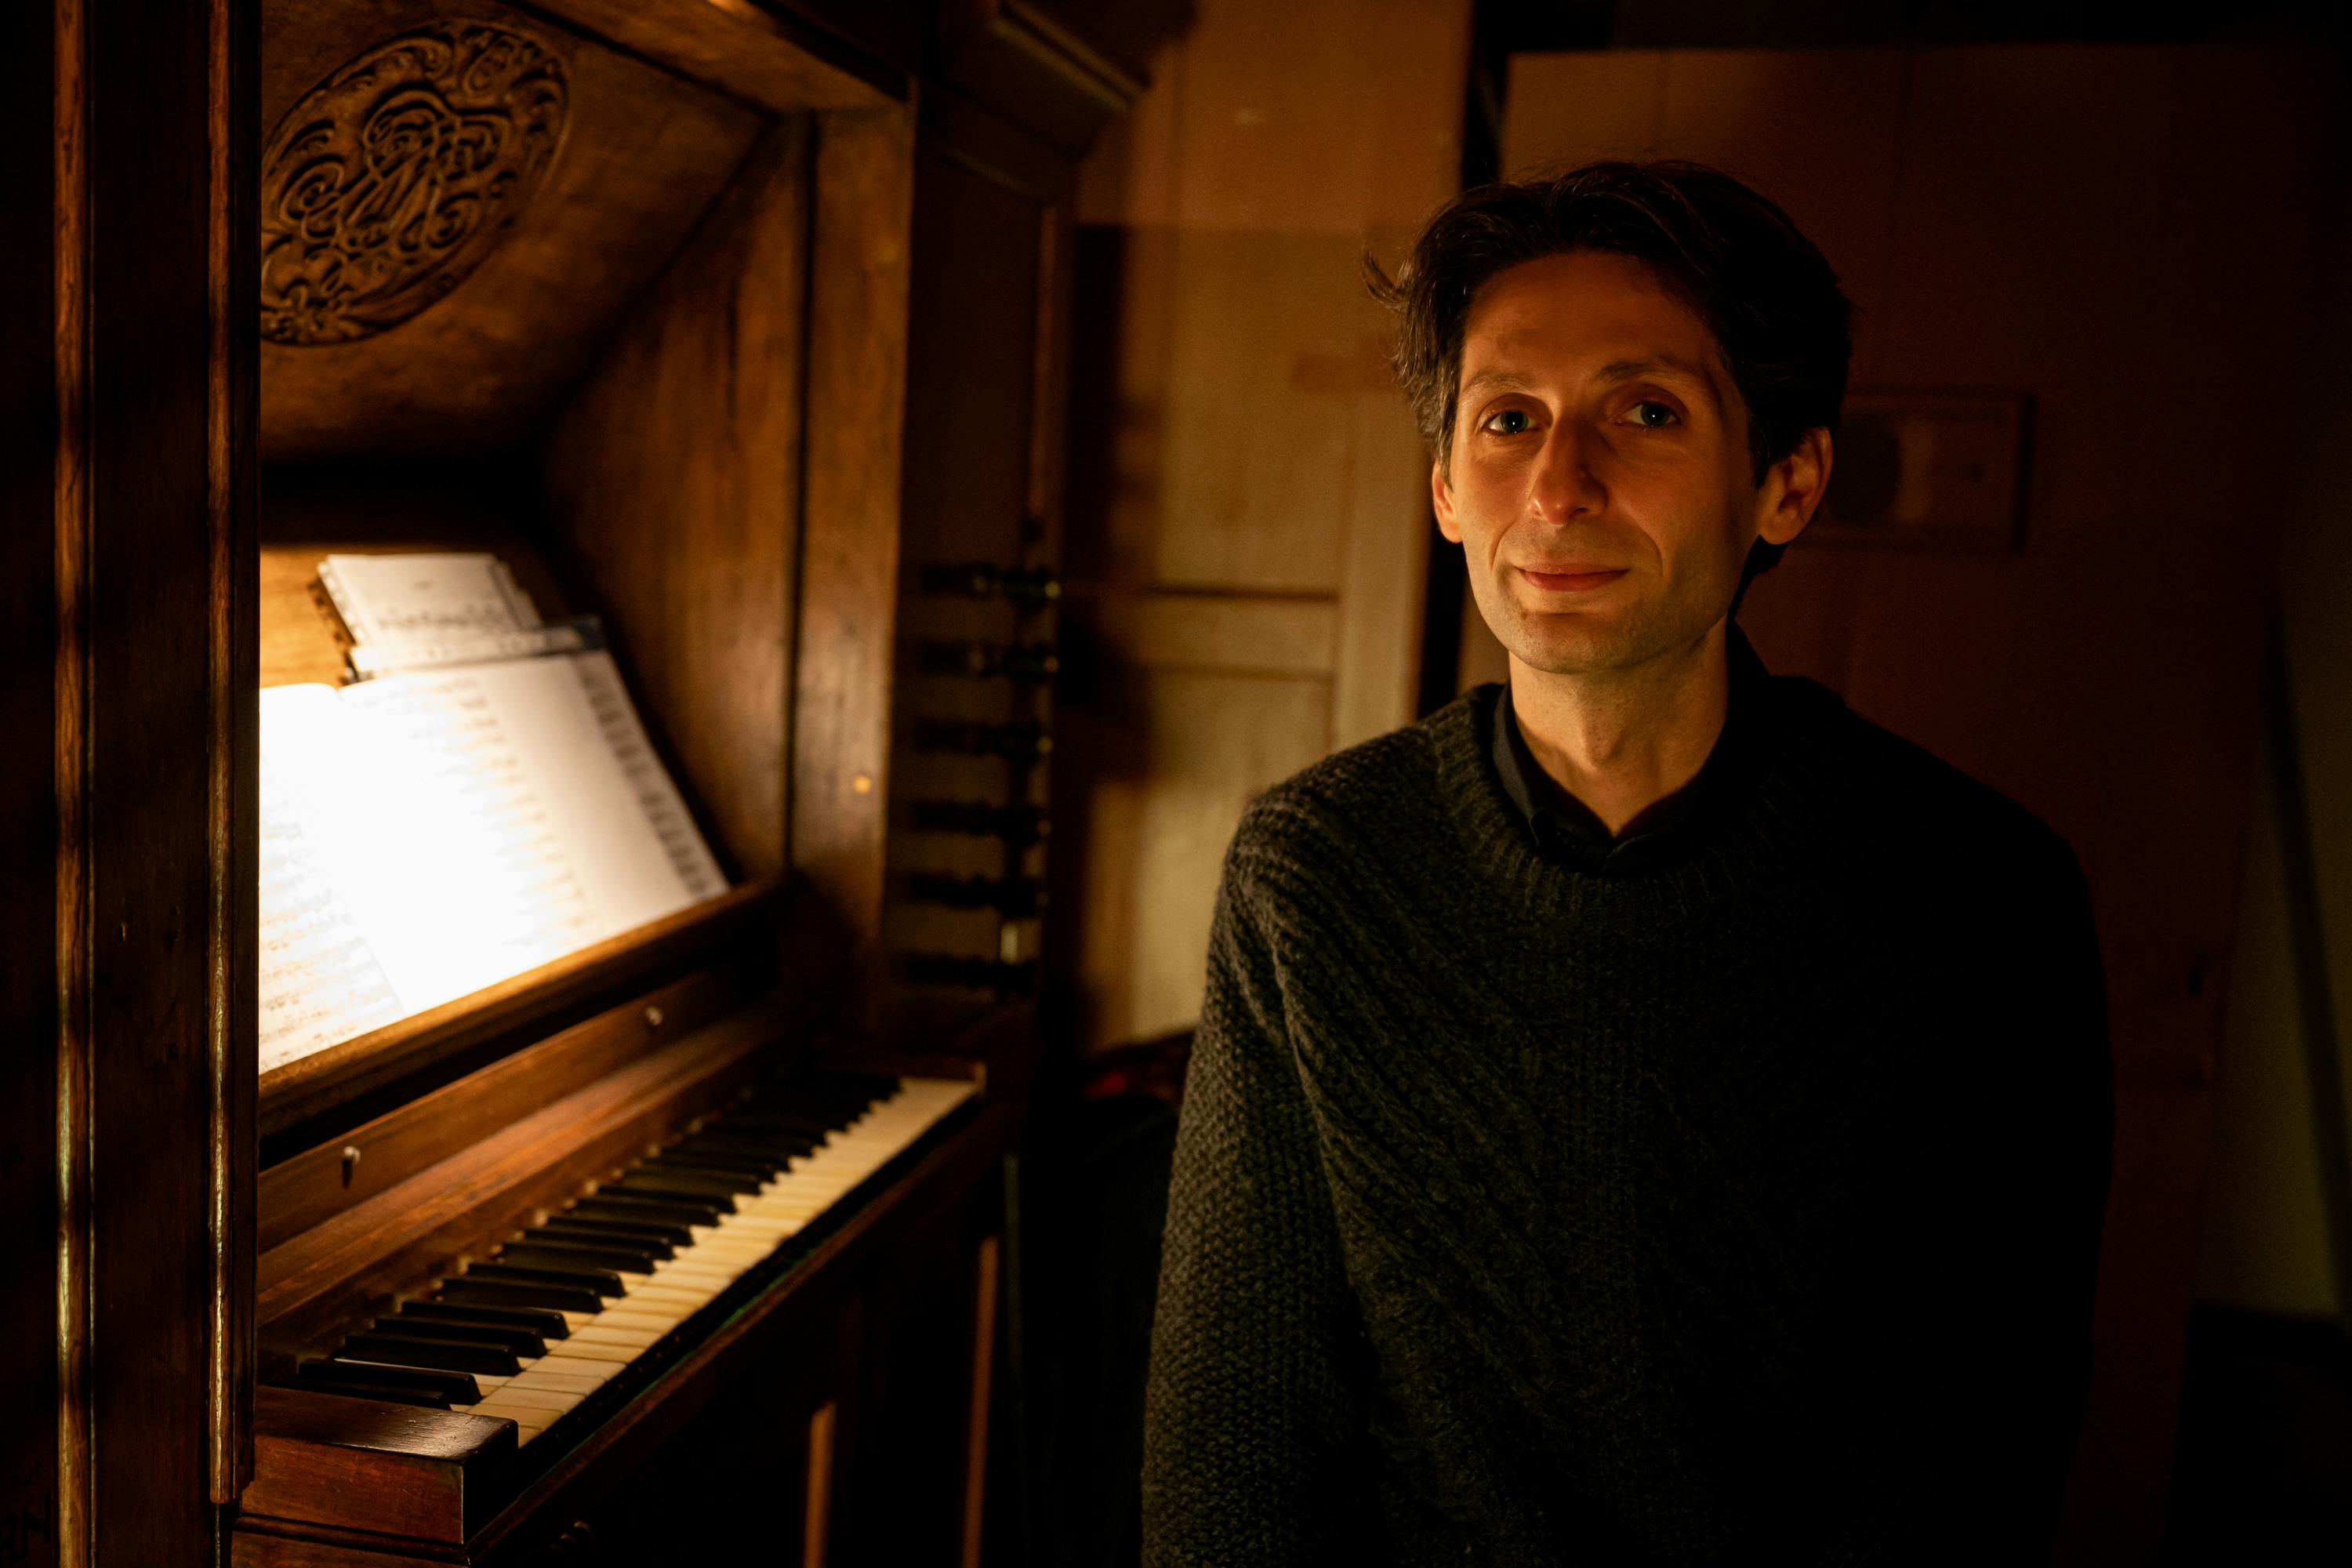 Orgelconcerten met Pietro Paganini